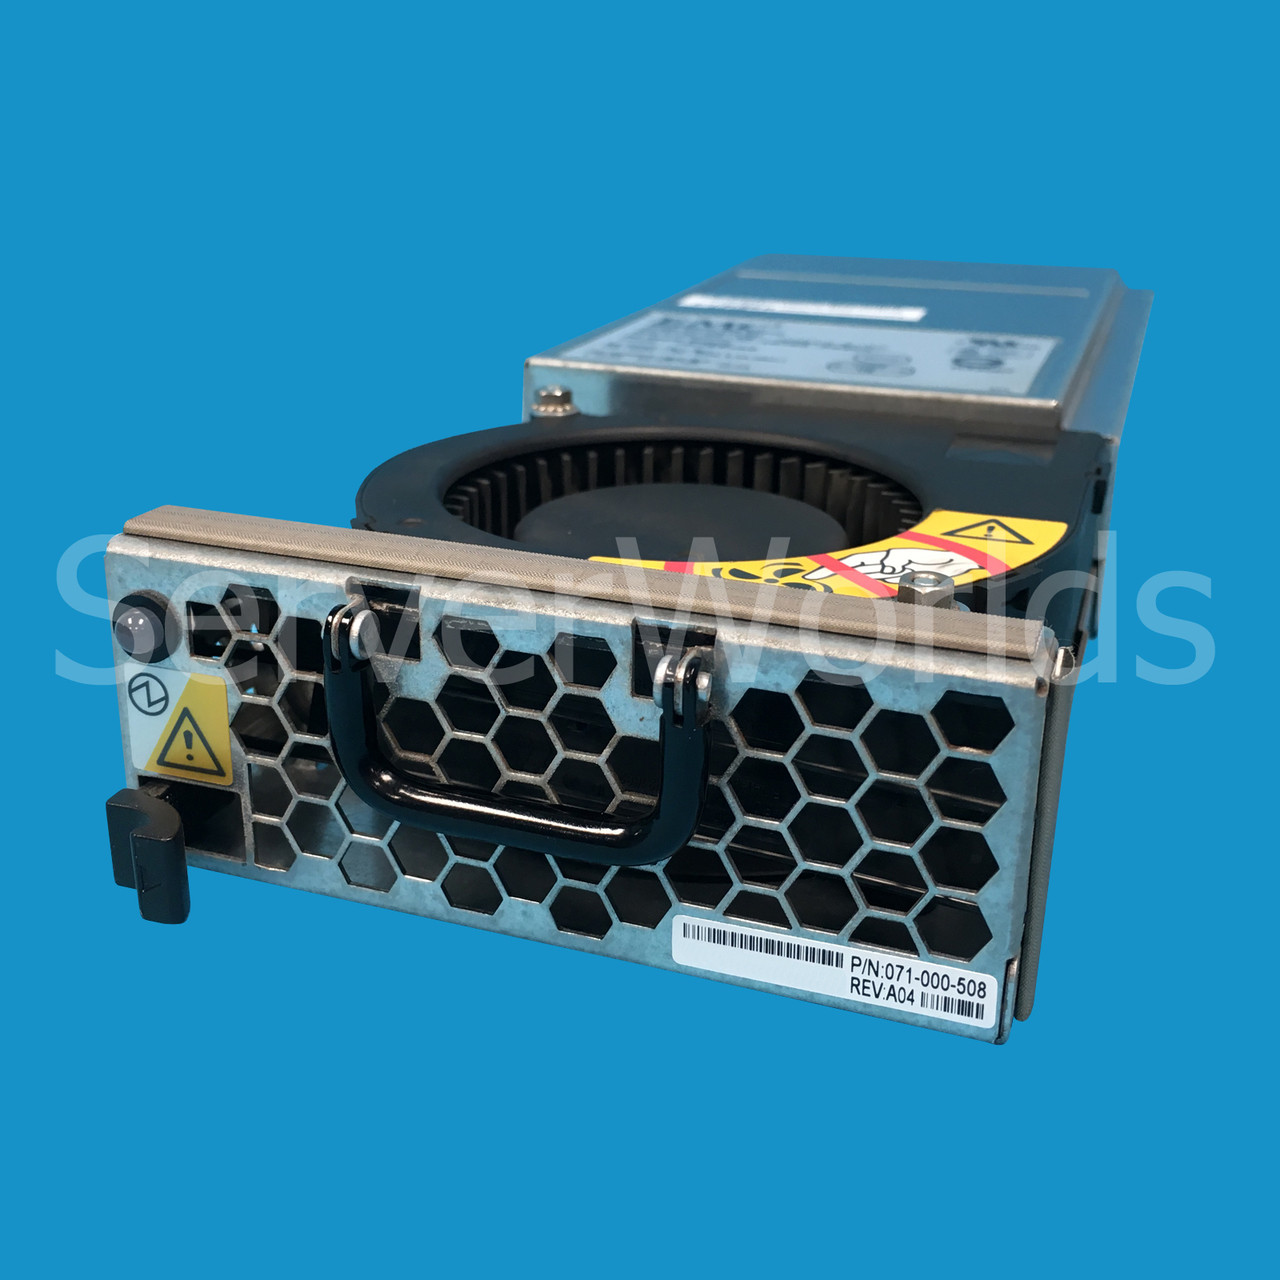 071-000-508 PN EMC Power Supply Blower Module for CX3-20 series